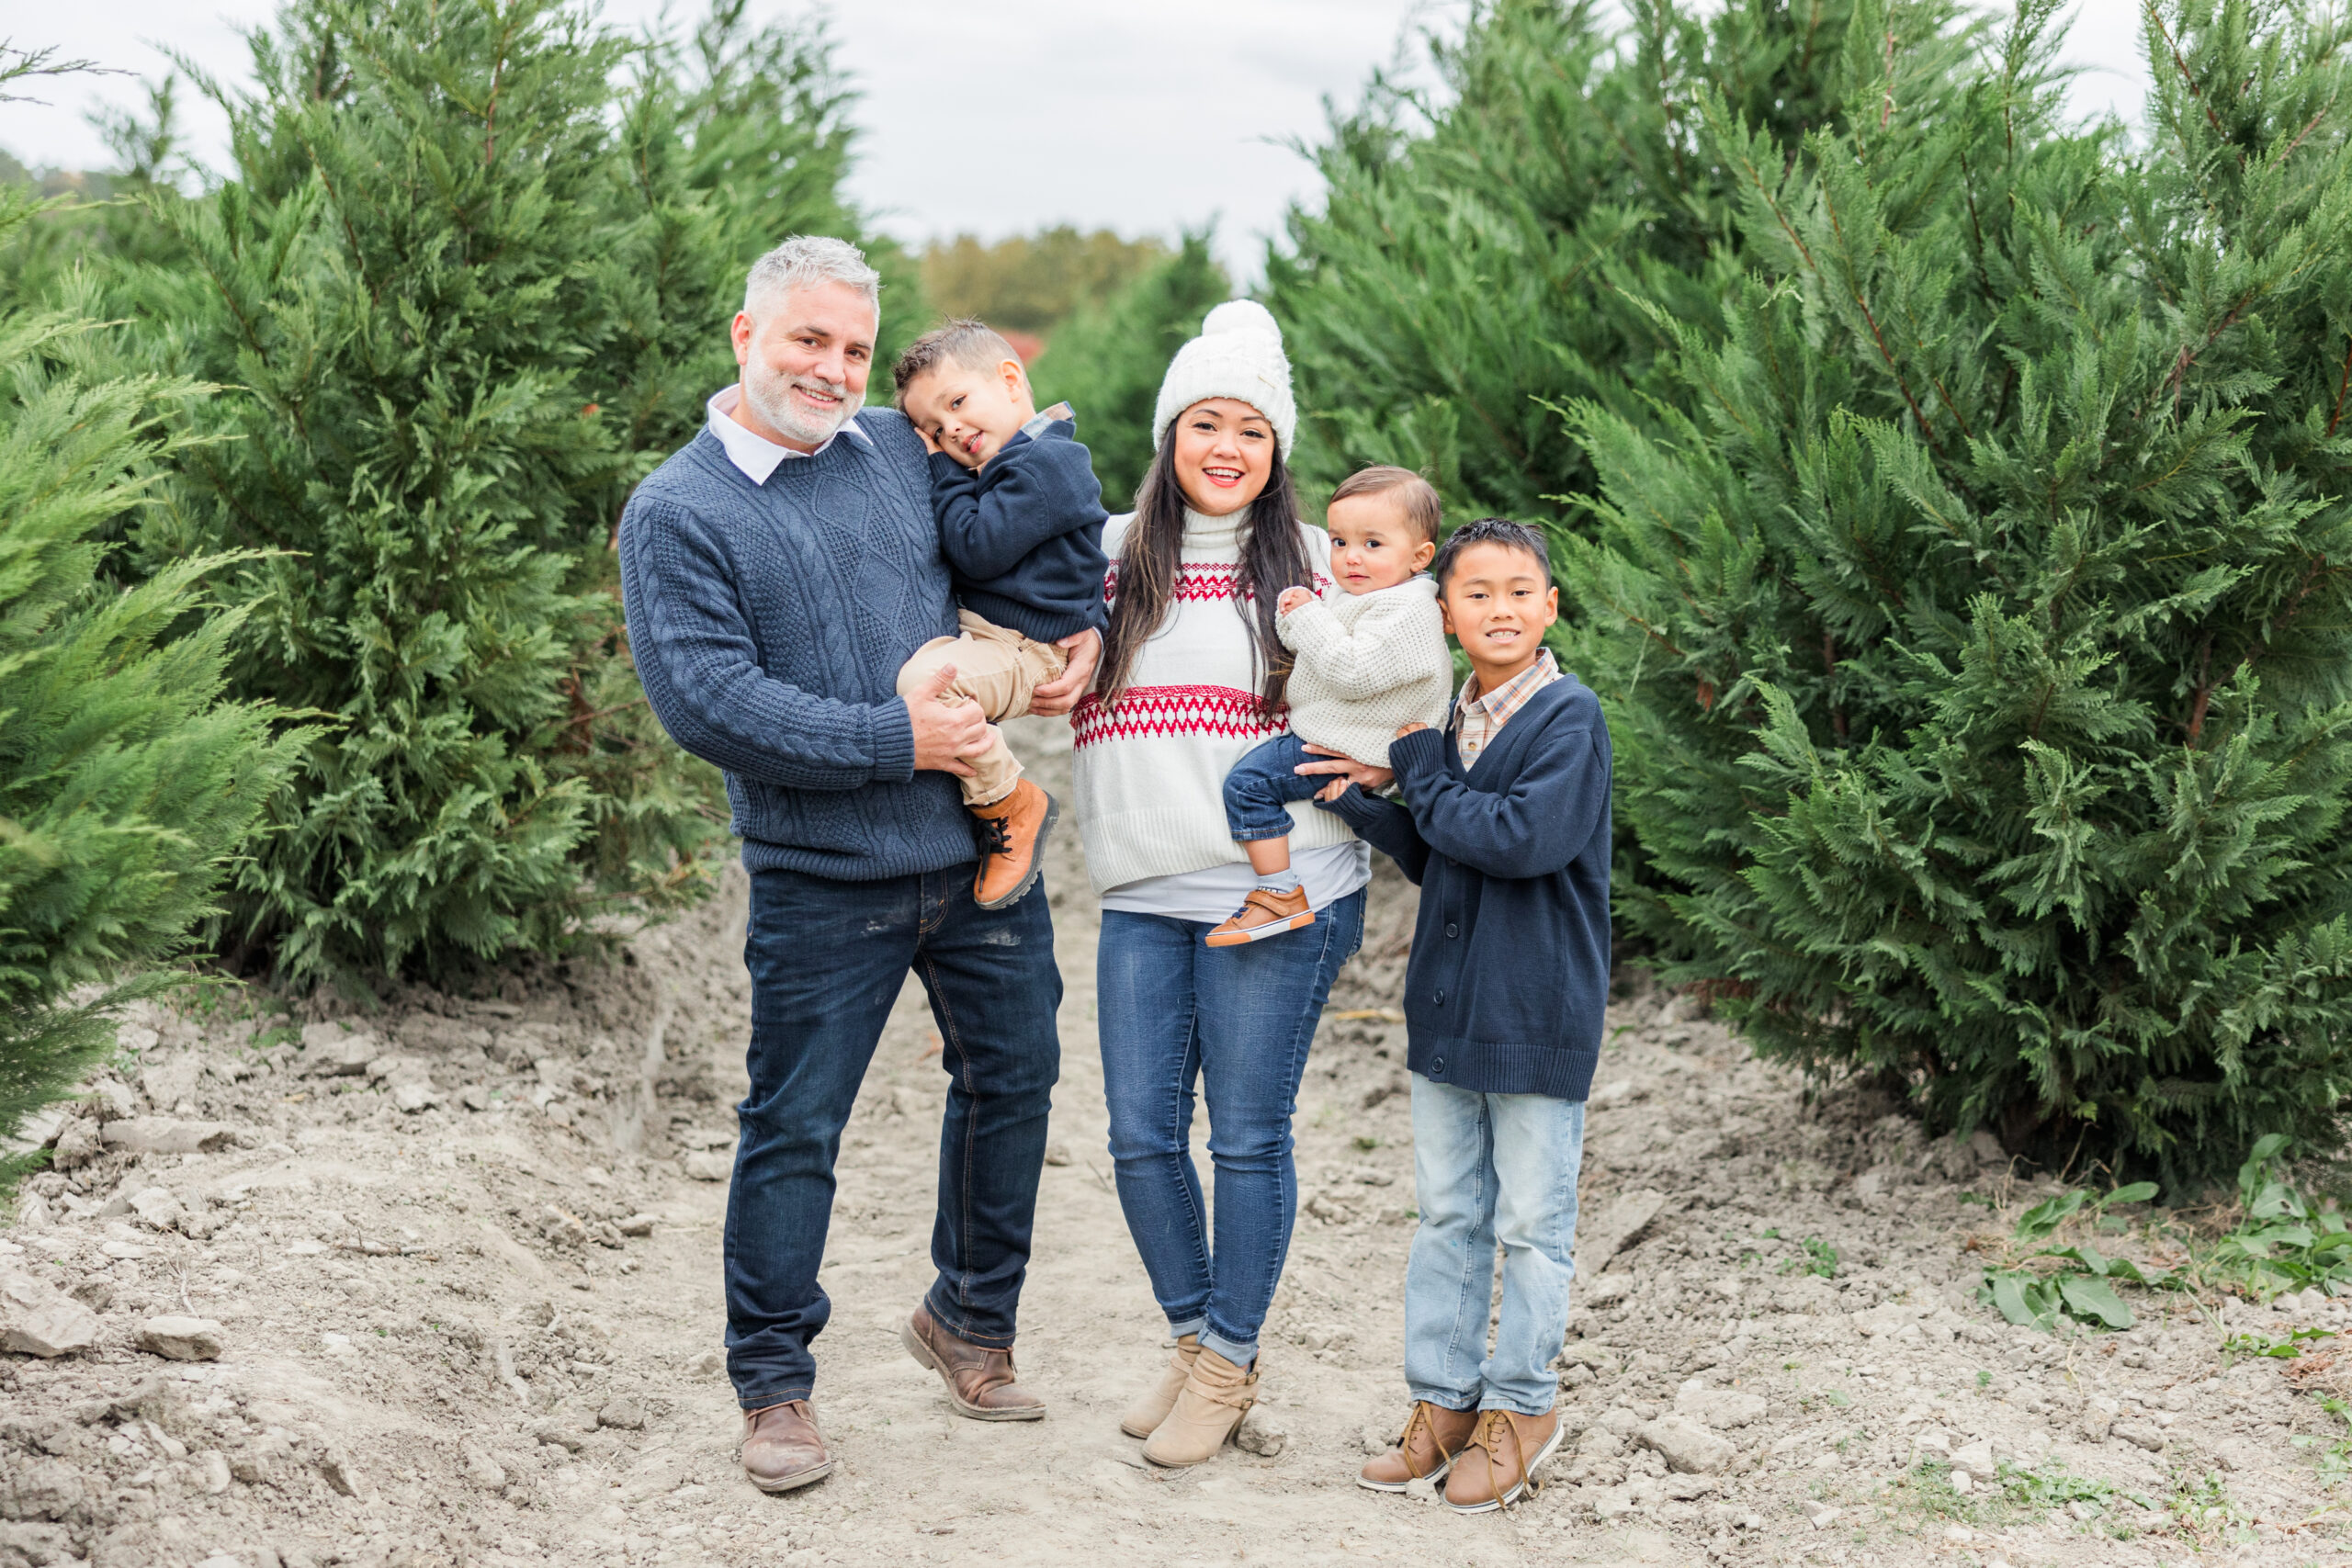 Filippino Family at the Historic Greenbrier Christmas Tree Farm